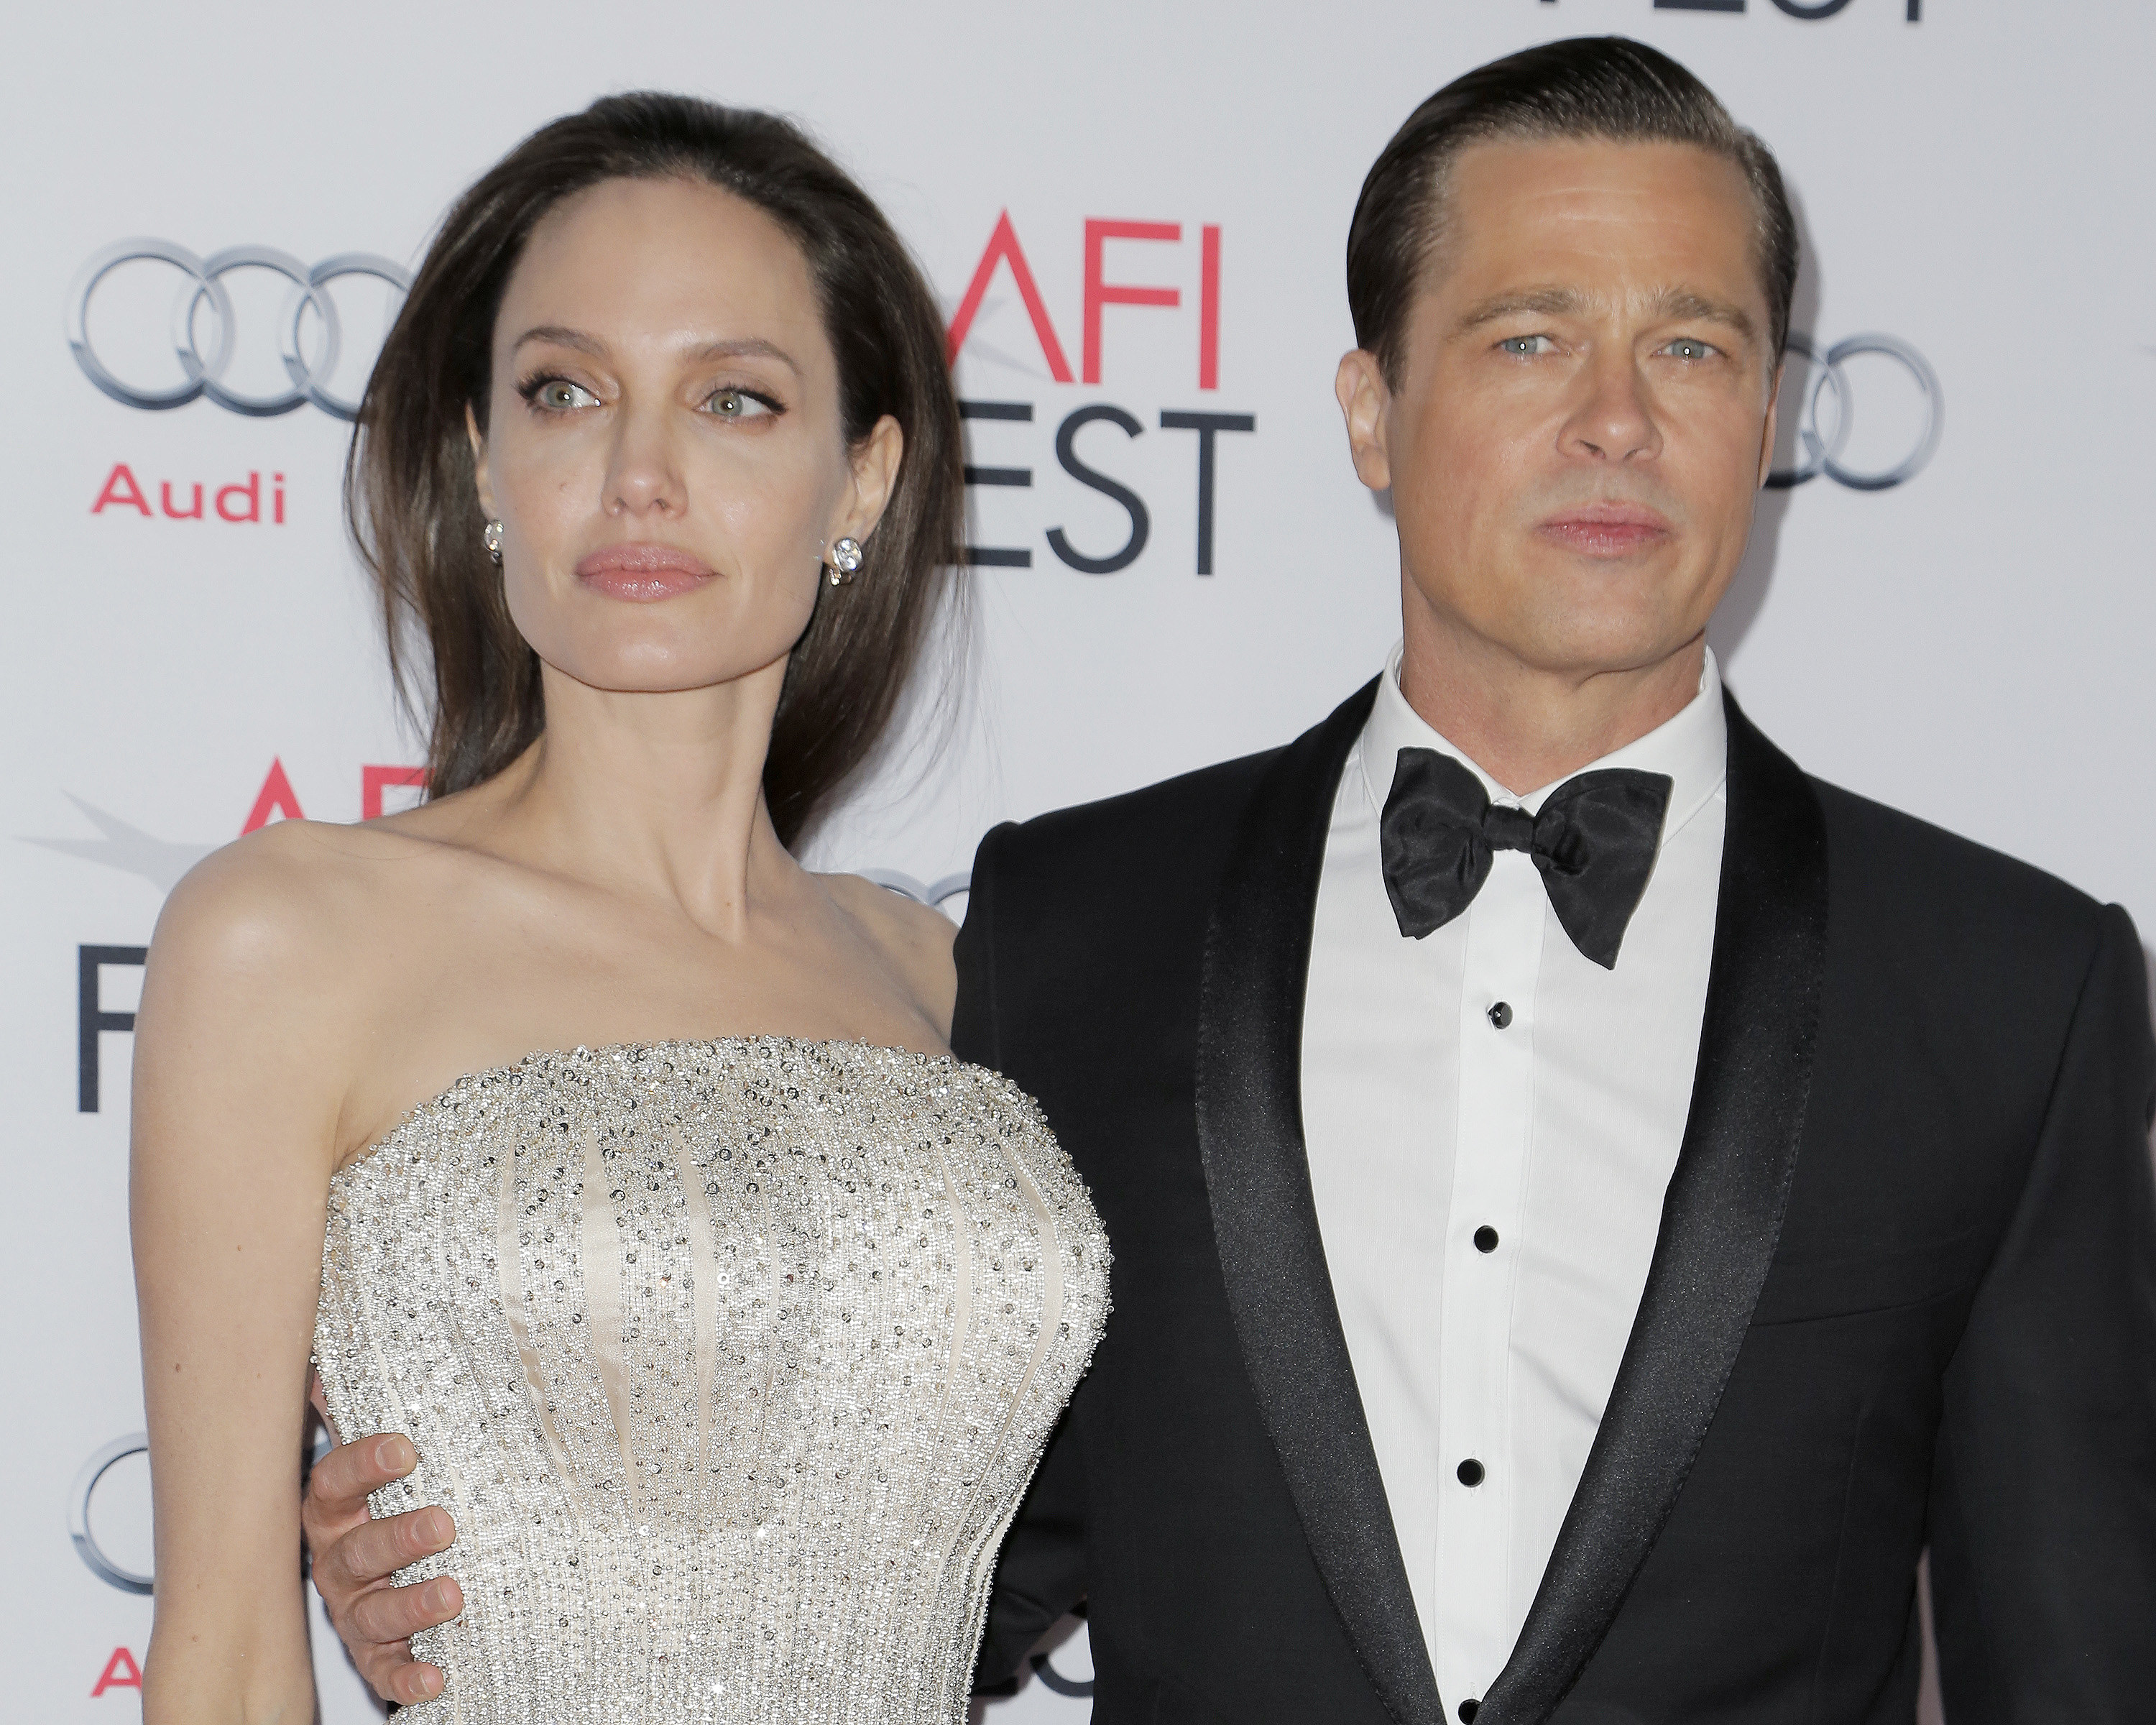 Angelina Jolie and Brad Pitt posing together